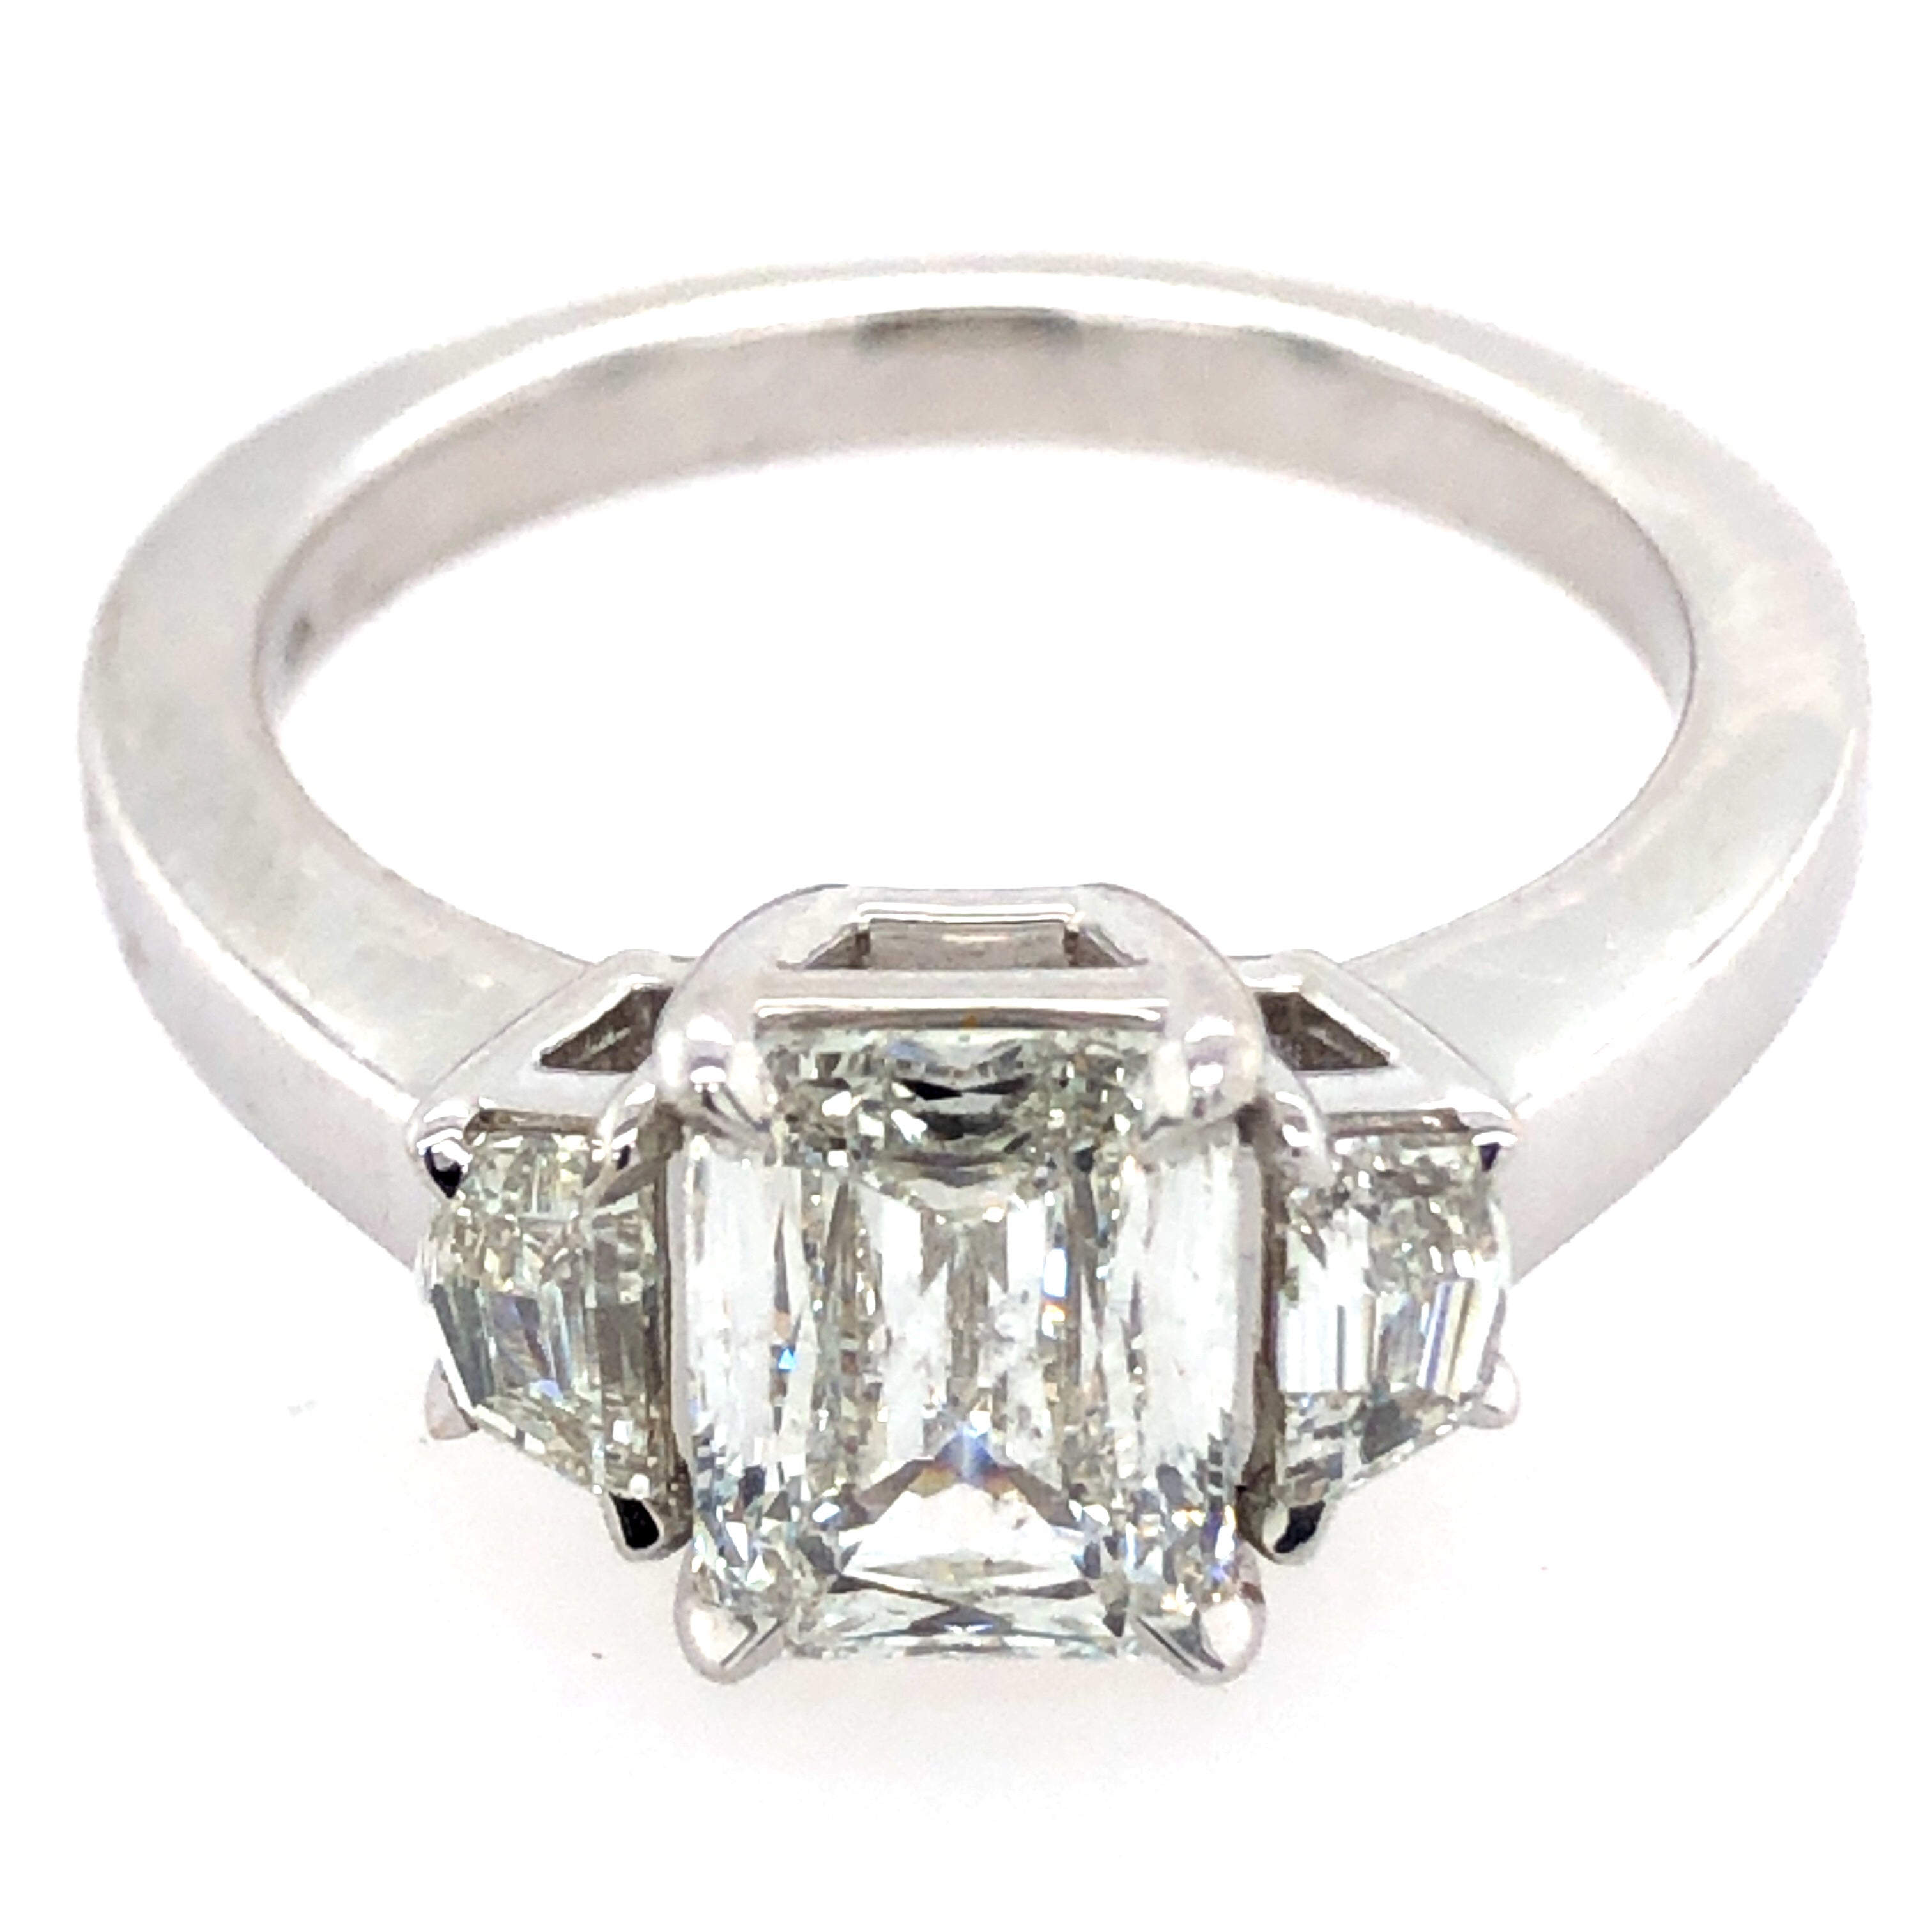 3 Stone Engagement Ring - Diamond Engagement Rings